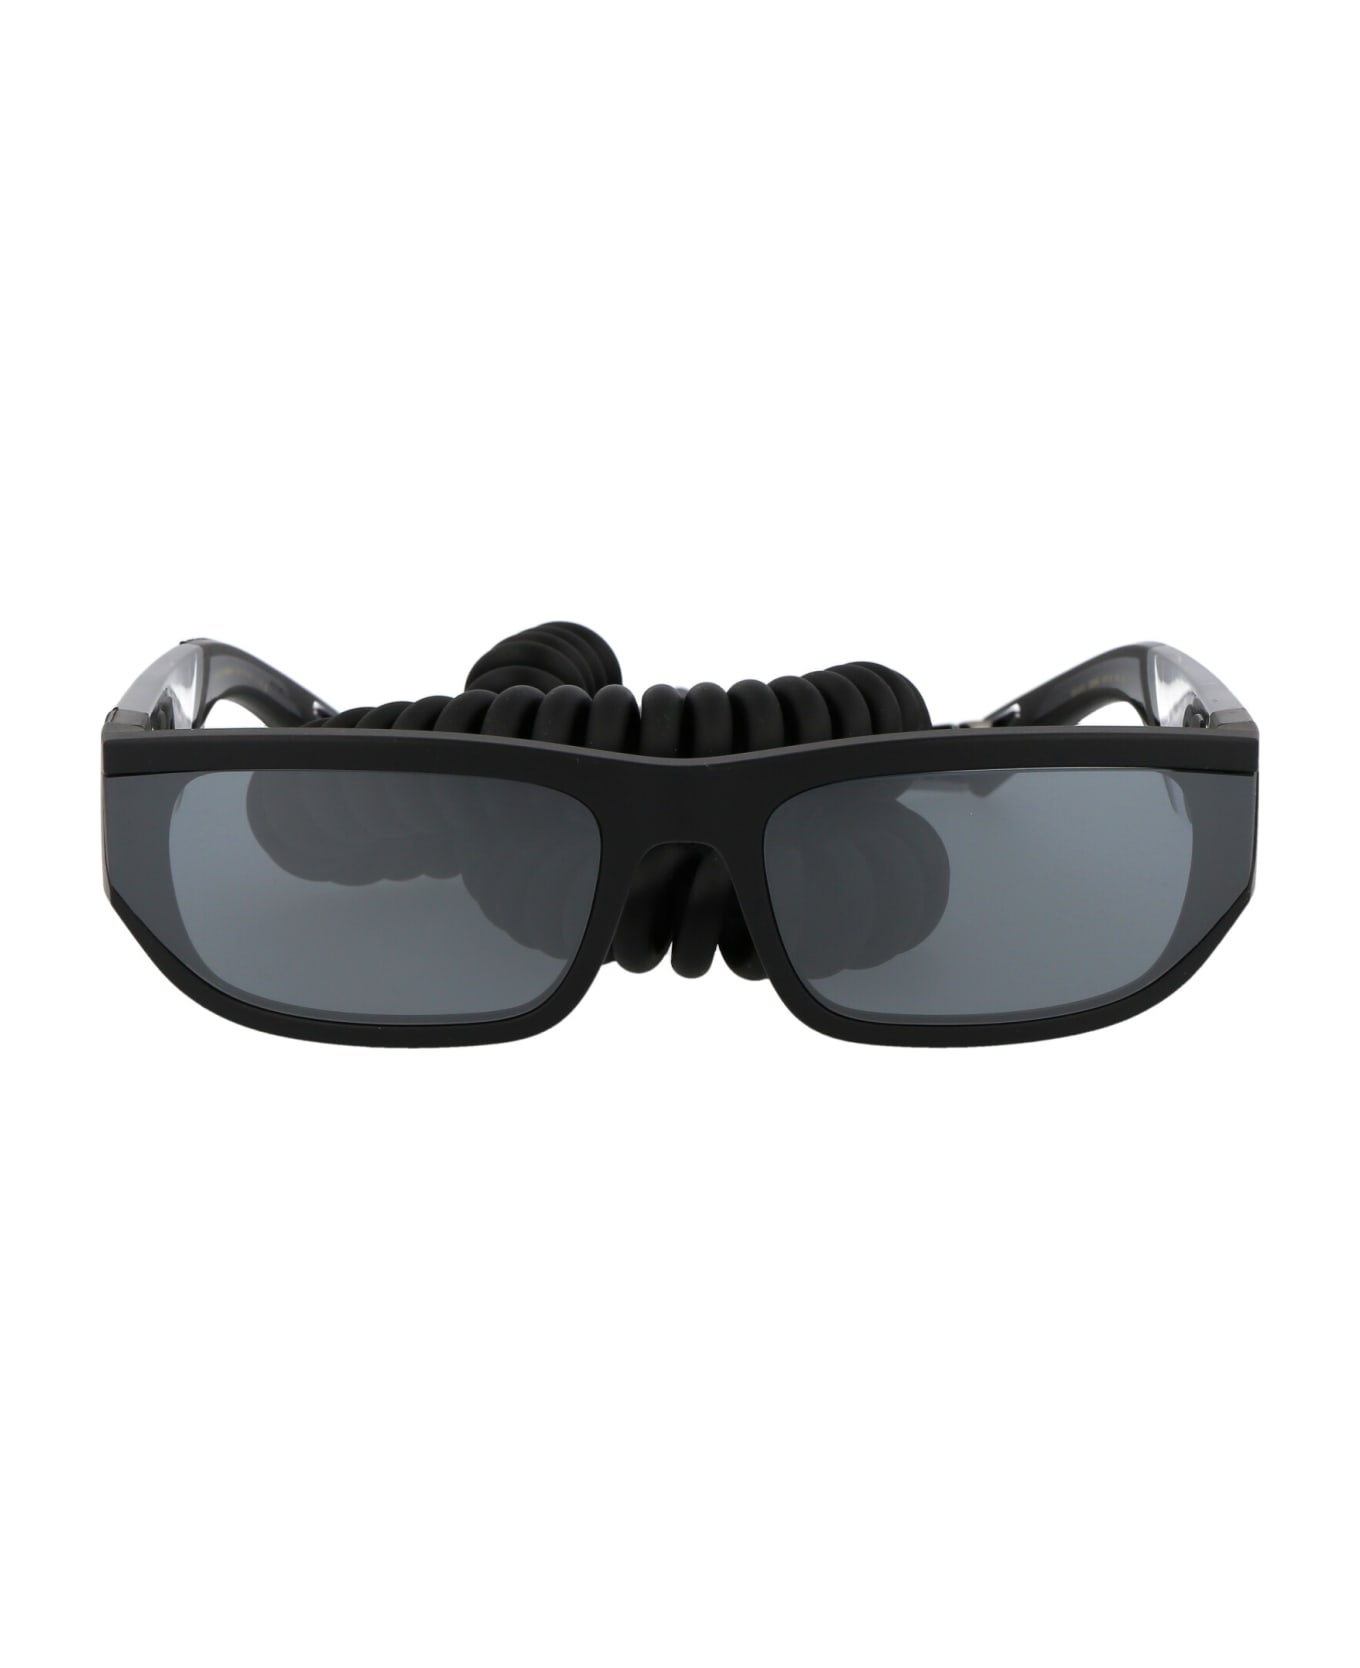 Dolce & Gabbana Eyewear 0dg6172 Sunglasses - 25256G Black Rubber